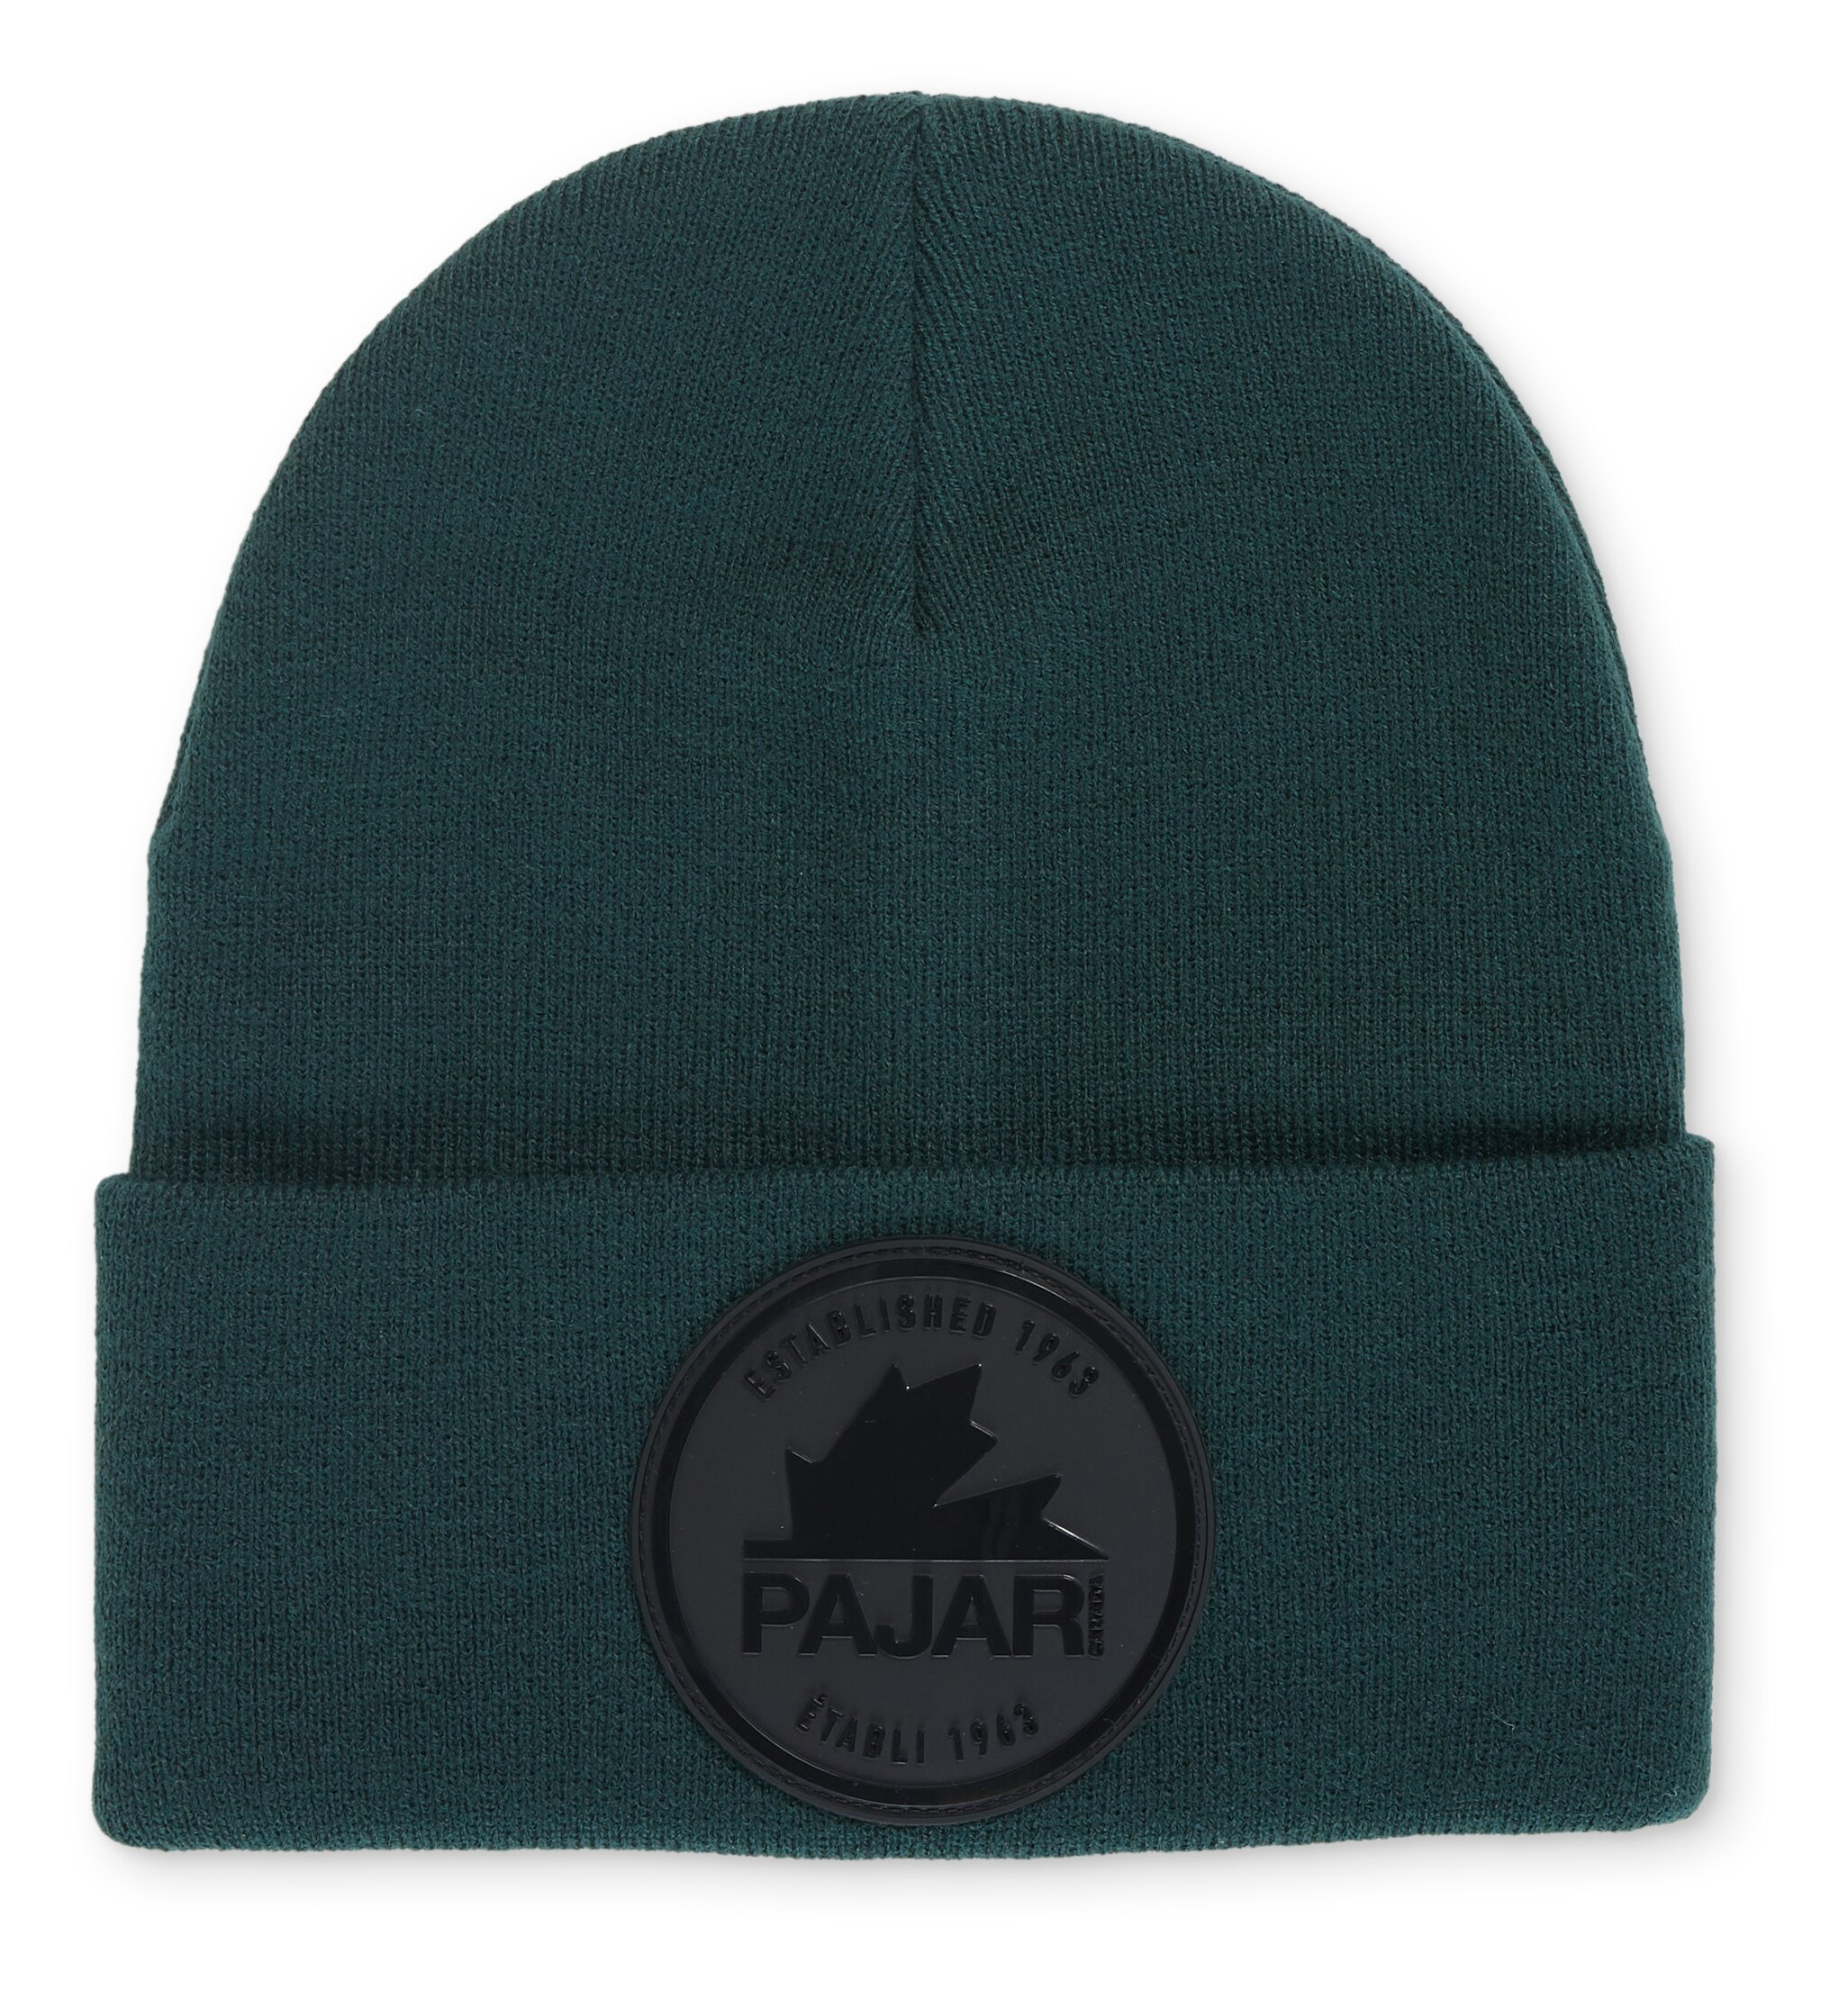 pajar winter hats - OFF-58% > Shipping free